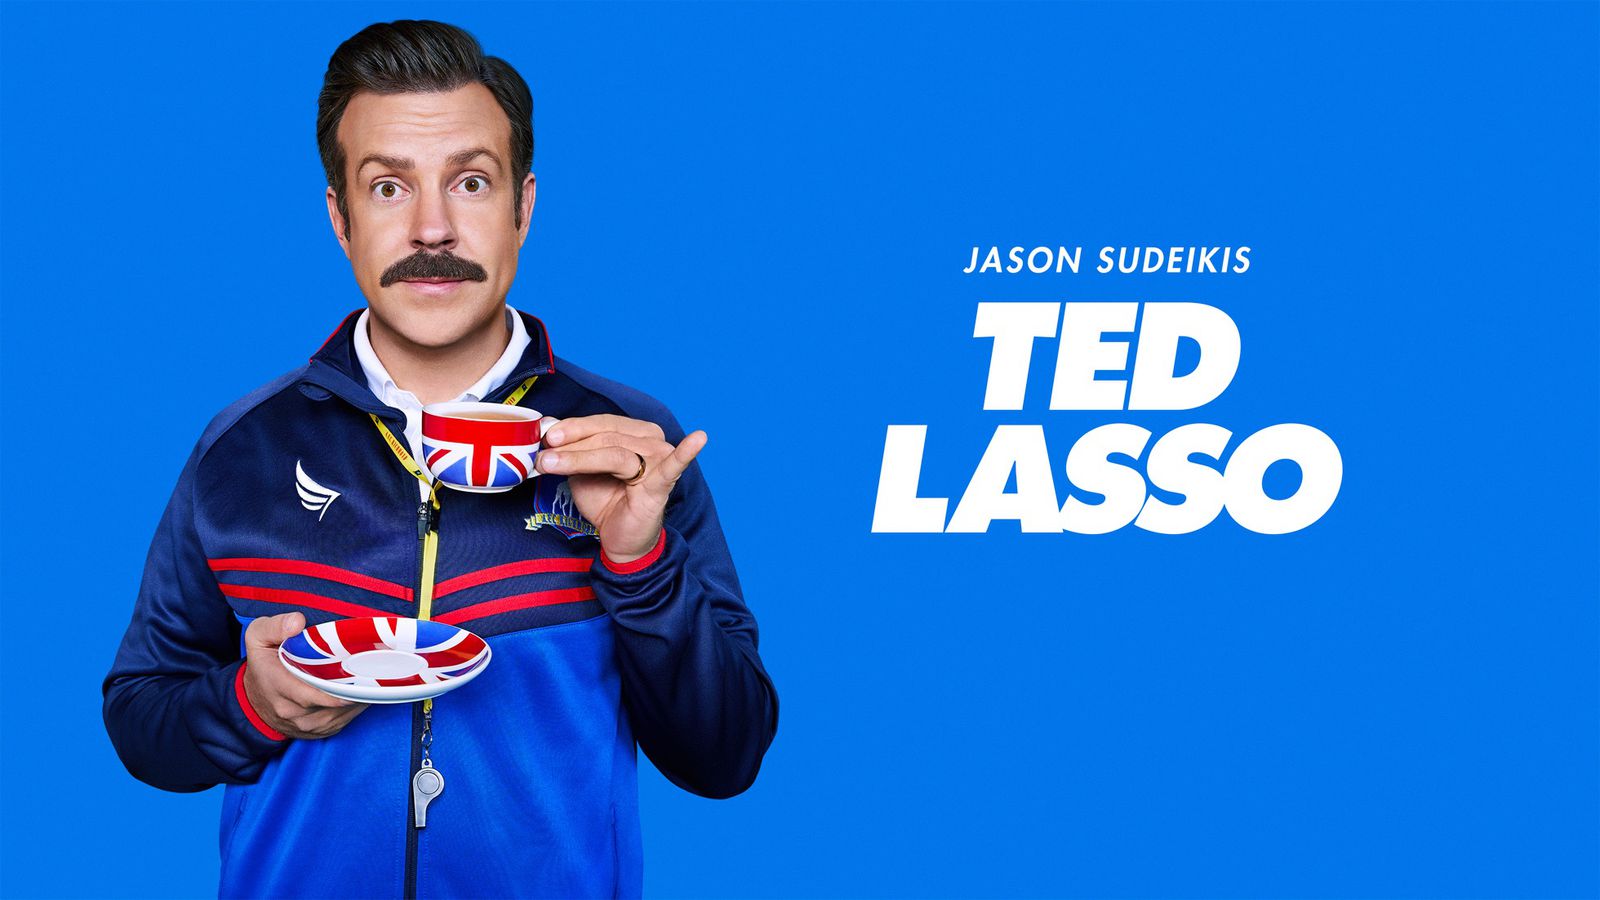 Jason Sudeikis: 'Ted Lasso' Apple TV+ Character Inspired by Robin Williams, Mr. Miyagi and Obi-Wan Kenobi - MacRumors